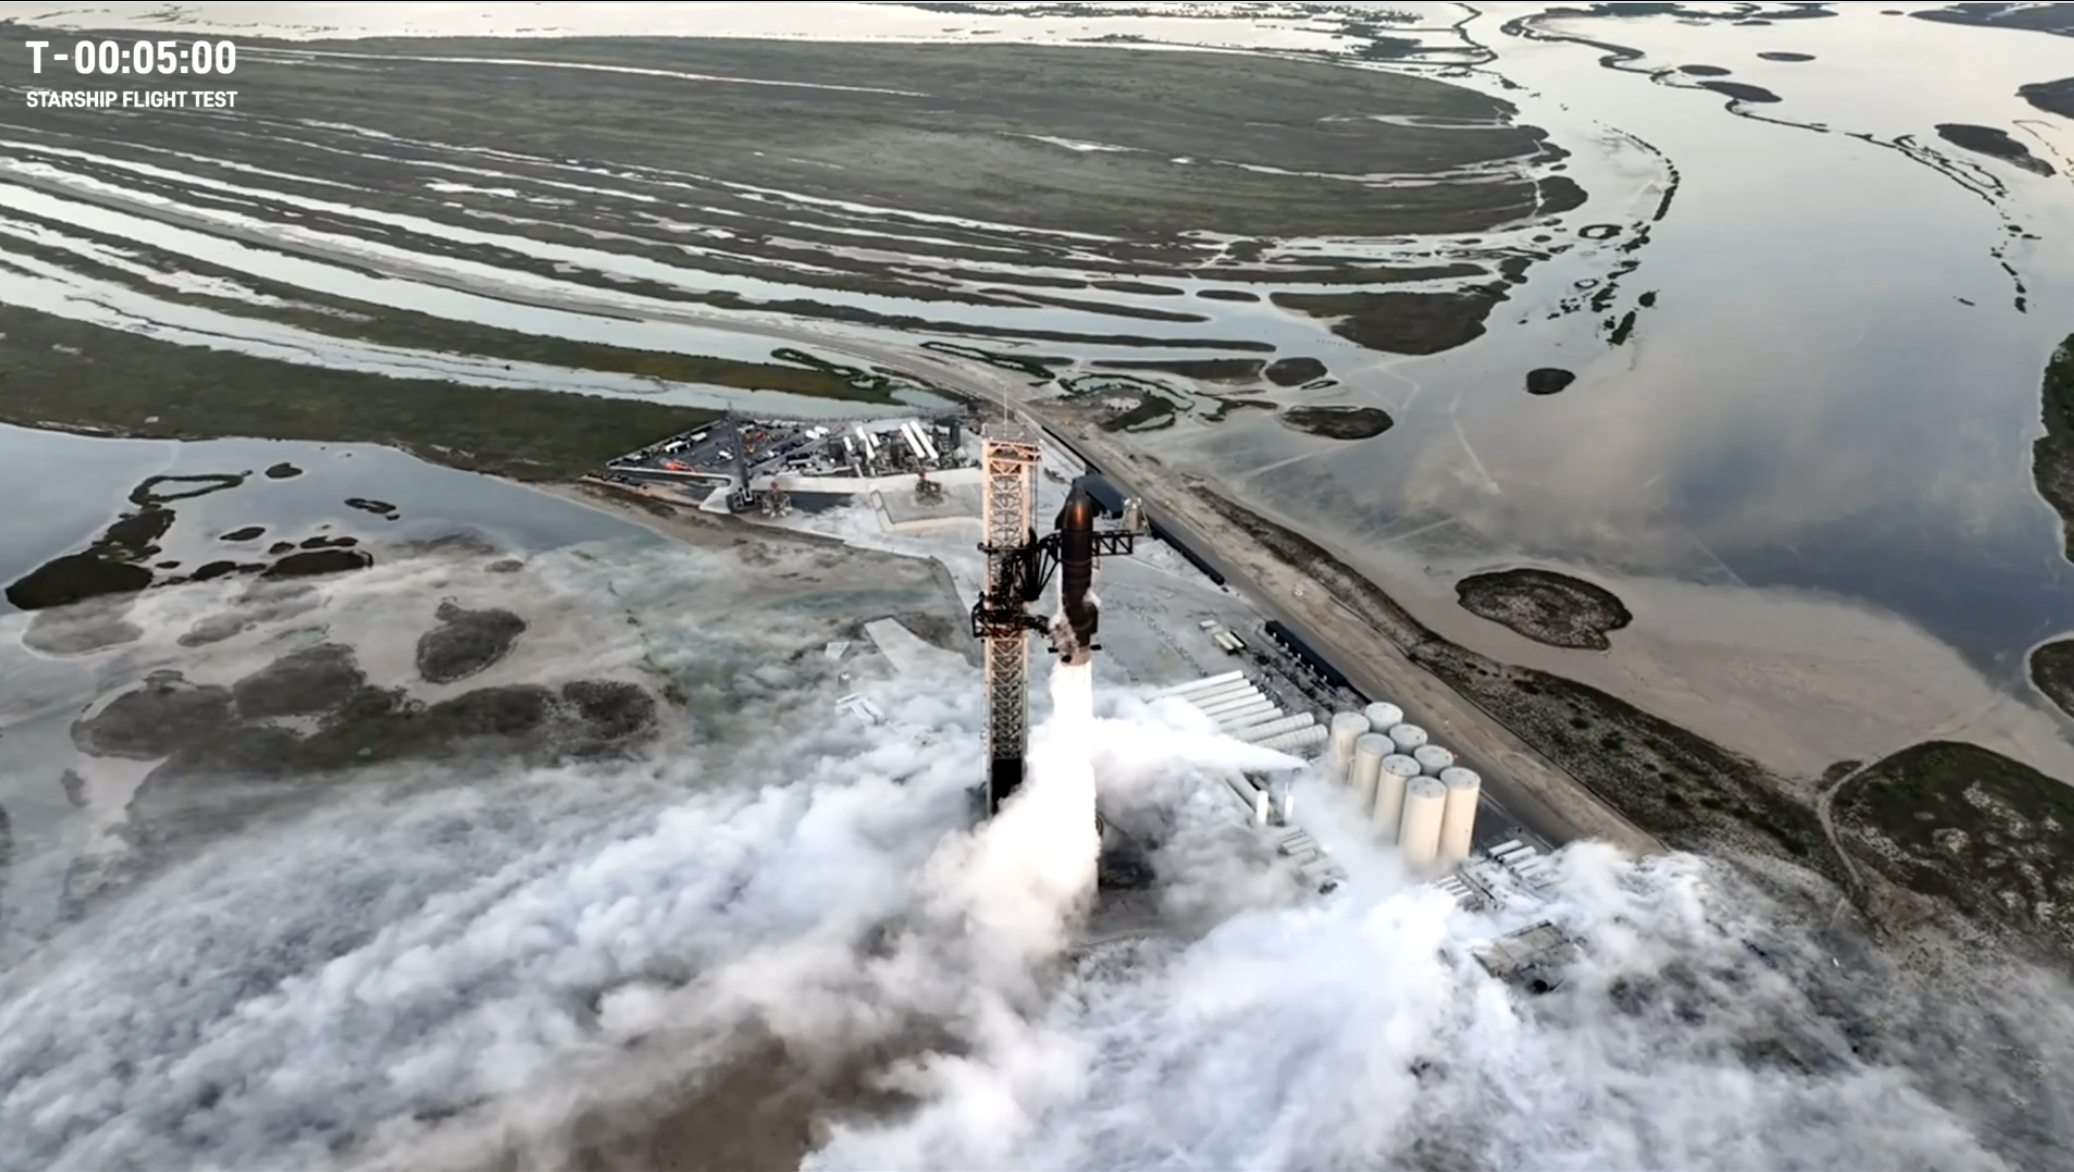 SpaceXがStarship2回目の飛行試験を実施、宇宙空間まで到達も通信途絶